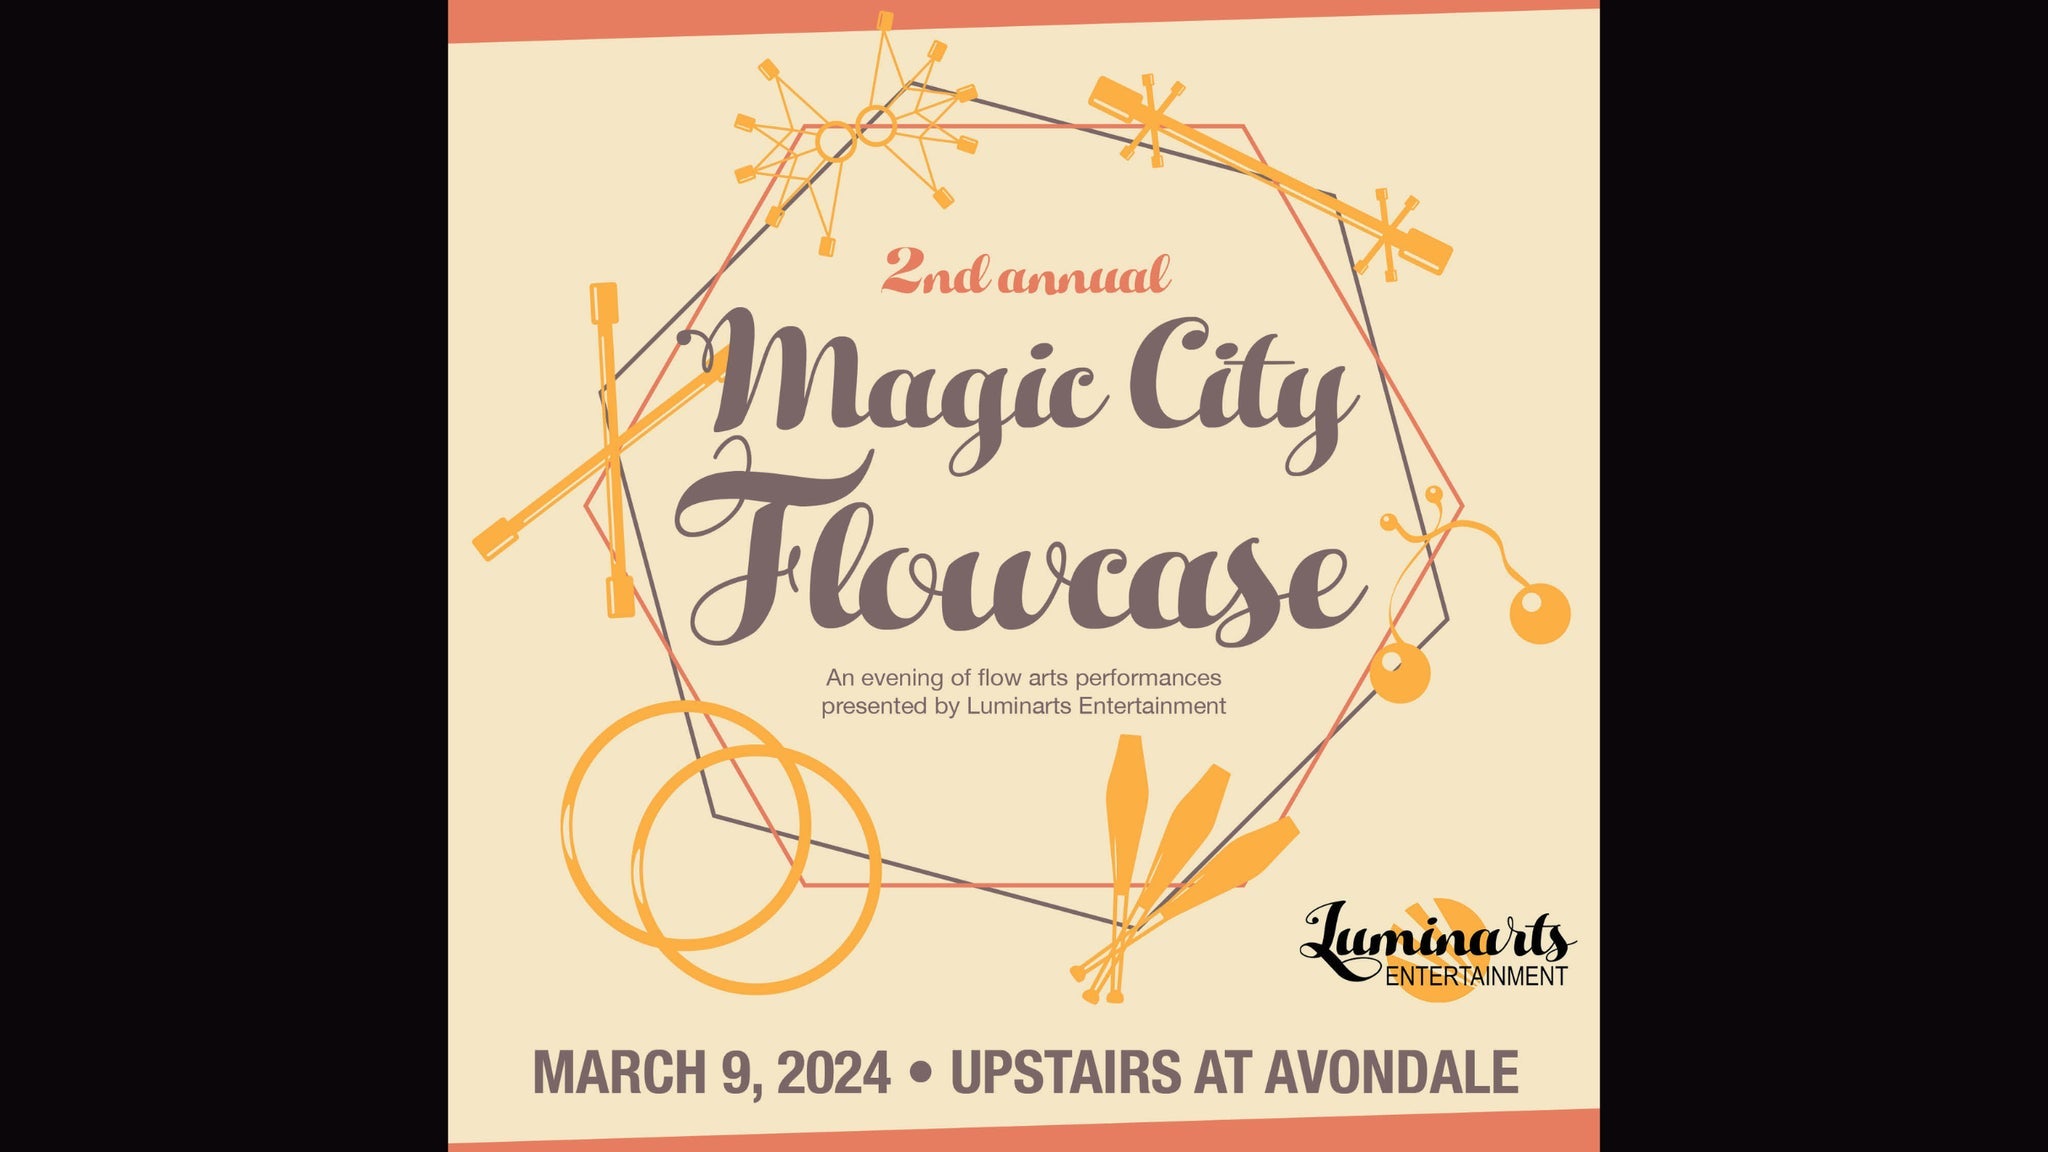 Magic City Flowcase - The Upstairs at Avondale